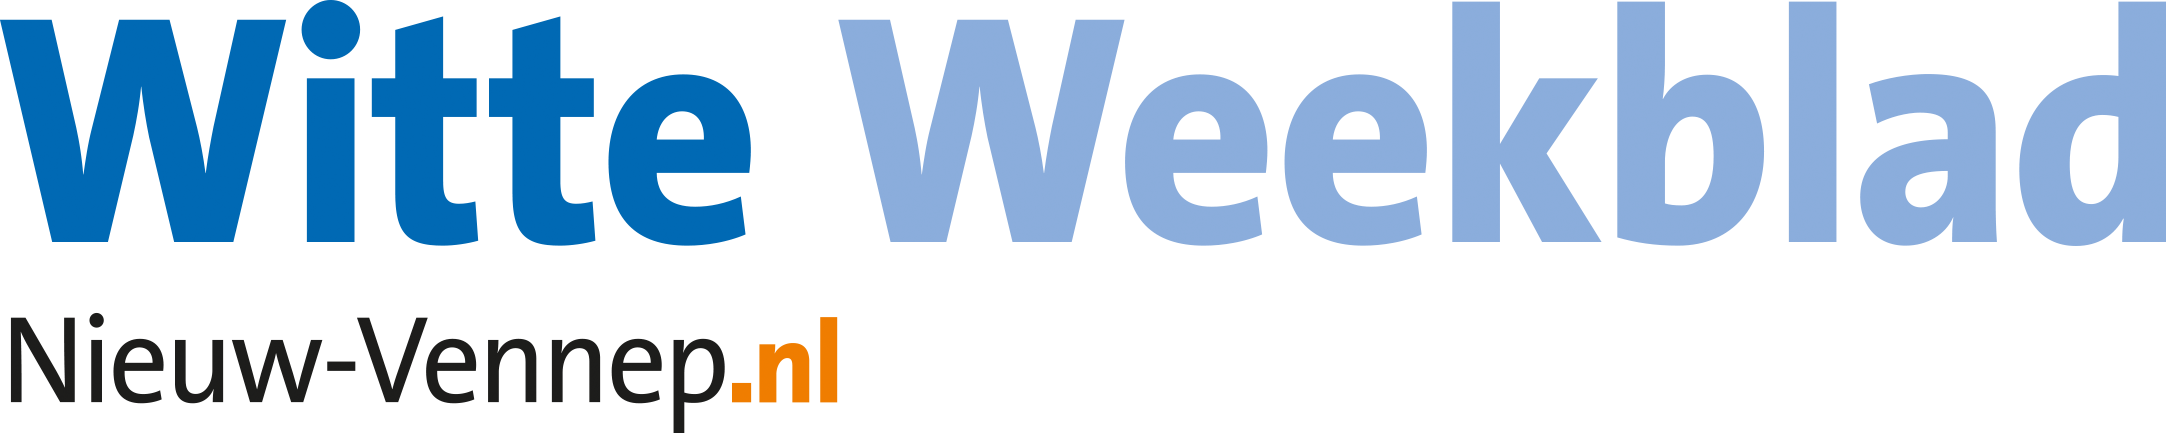 Witte Weekblad Nieuw-Vennep